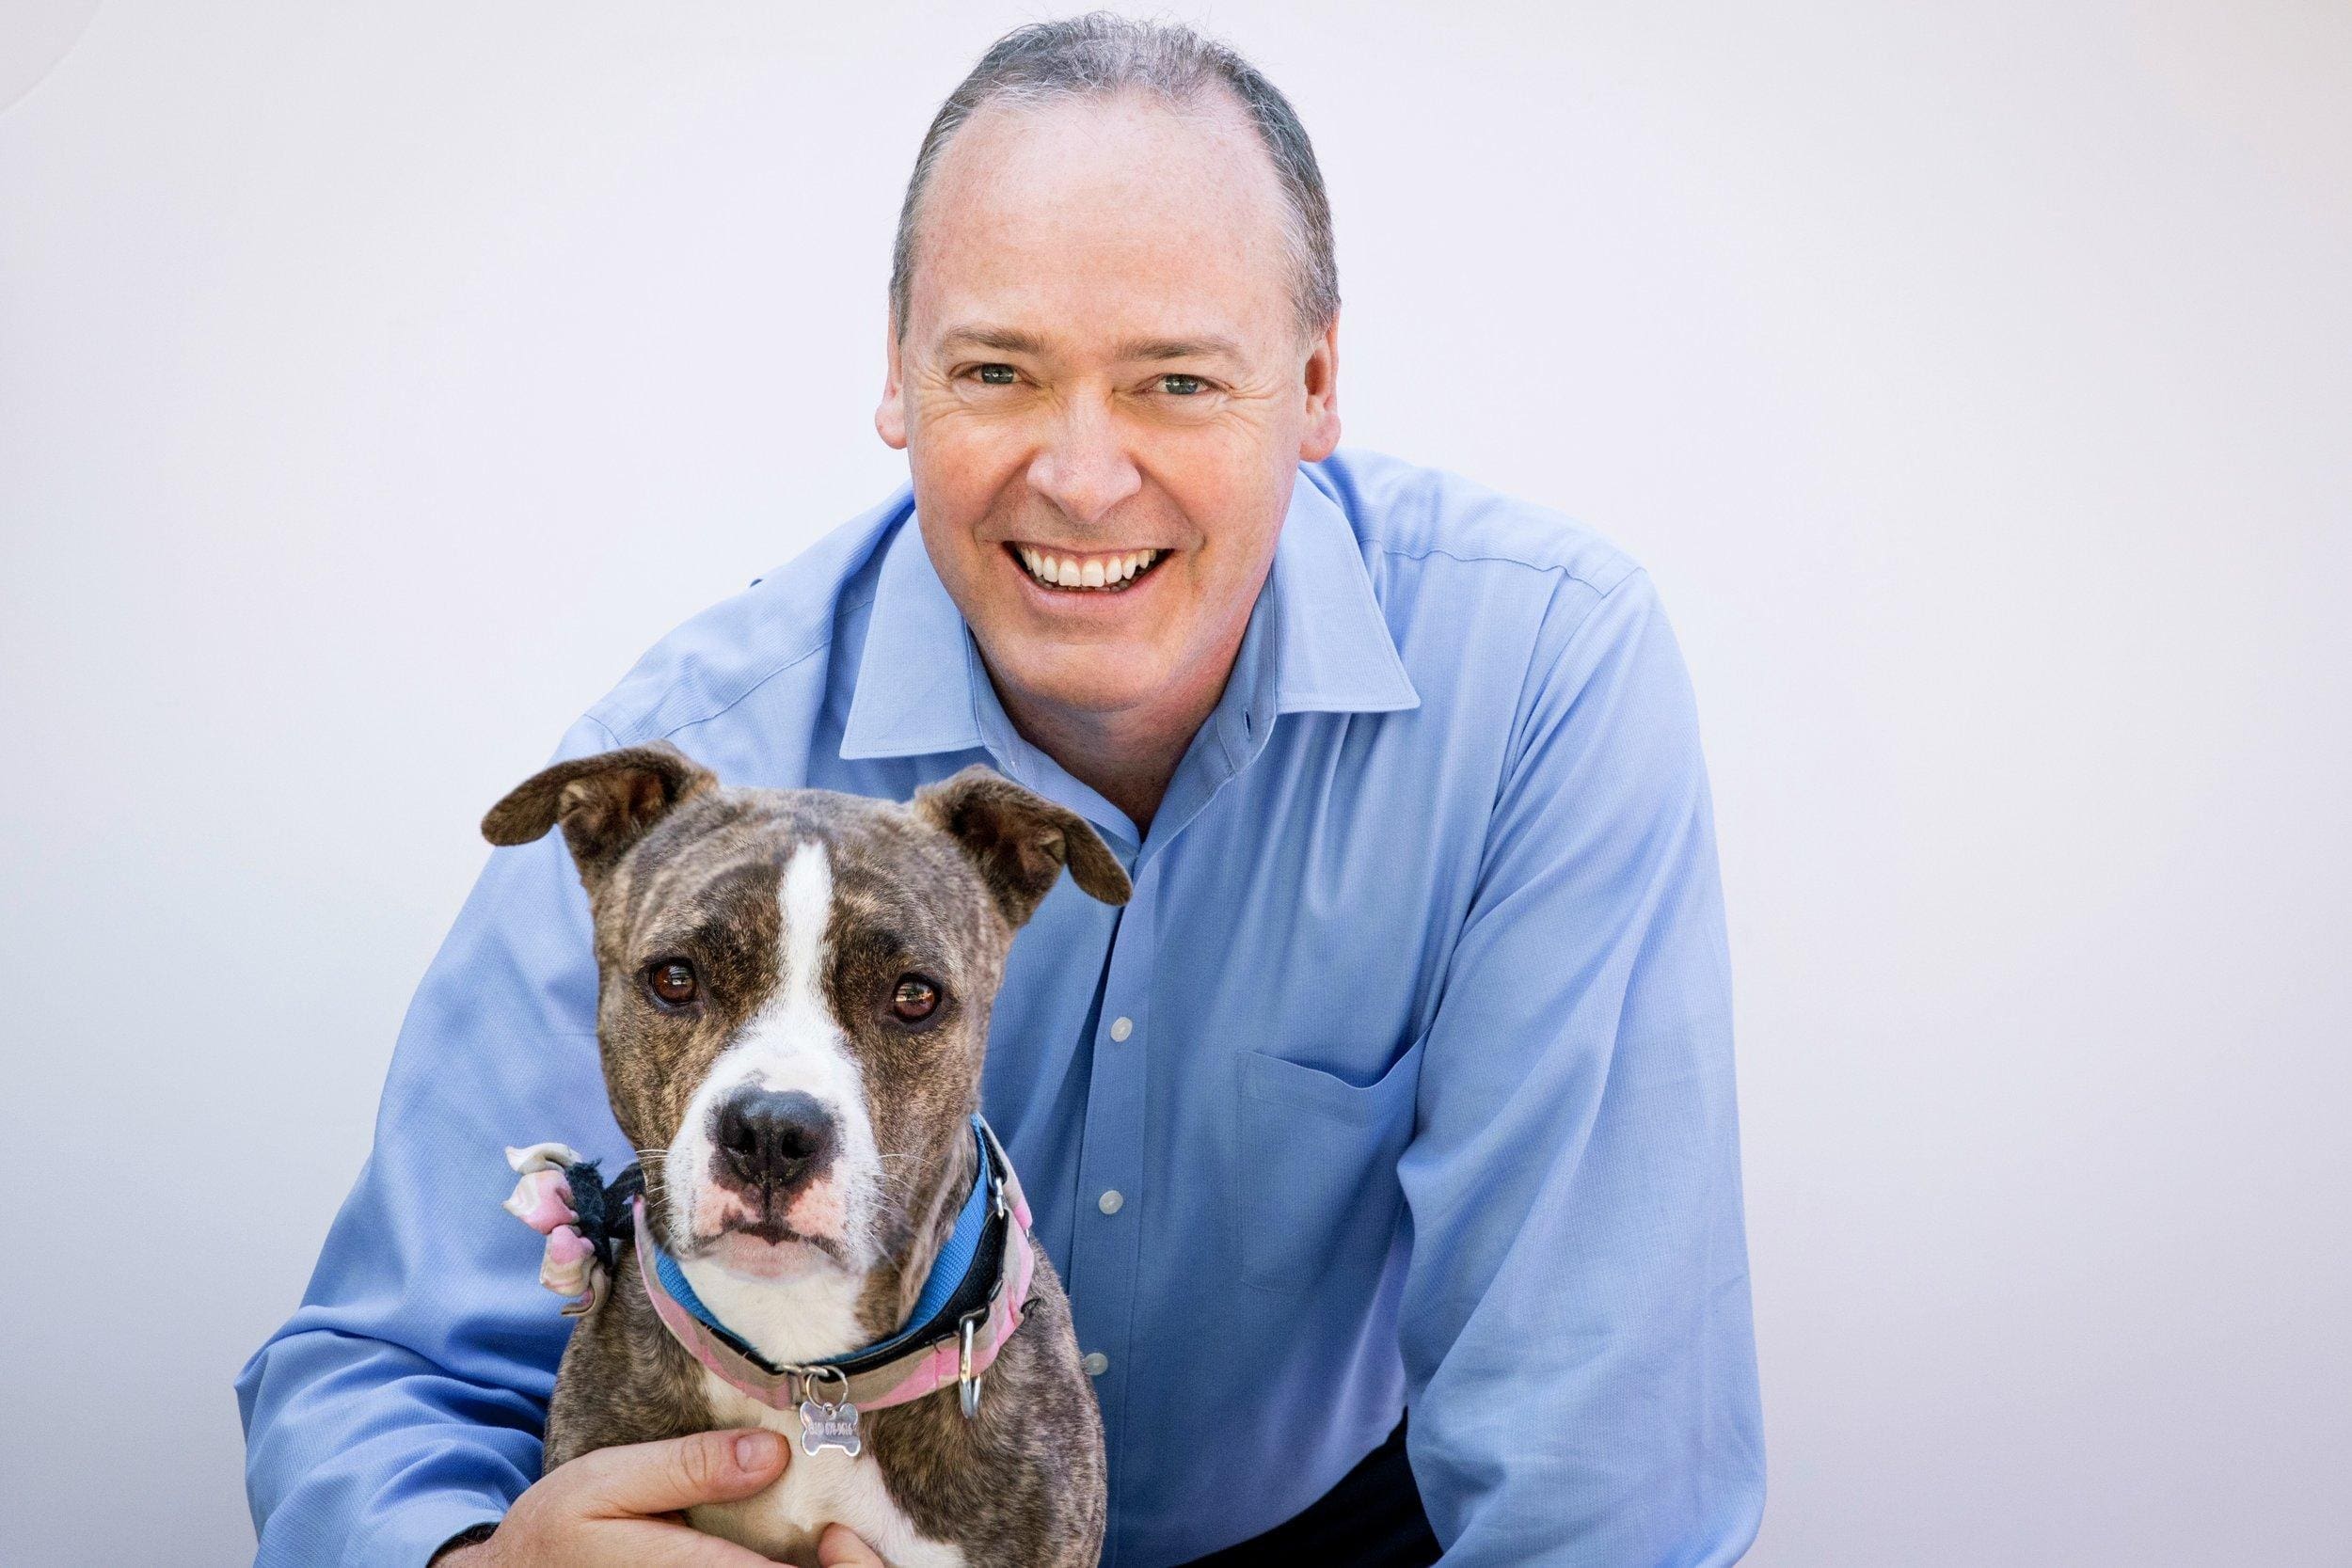 Pet Care Industry & Entrepreneurship with Brett Yates